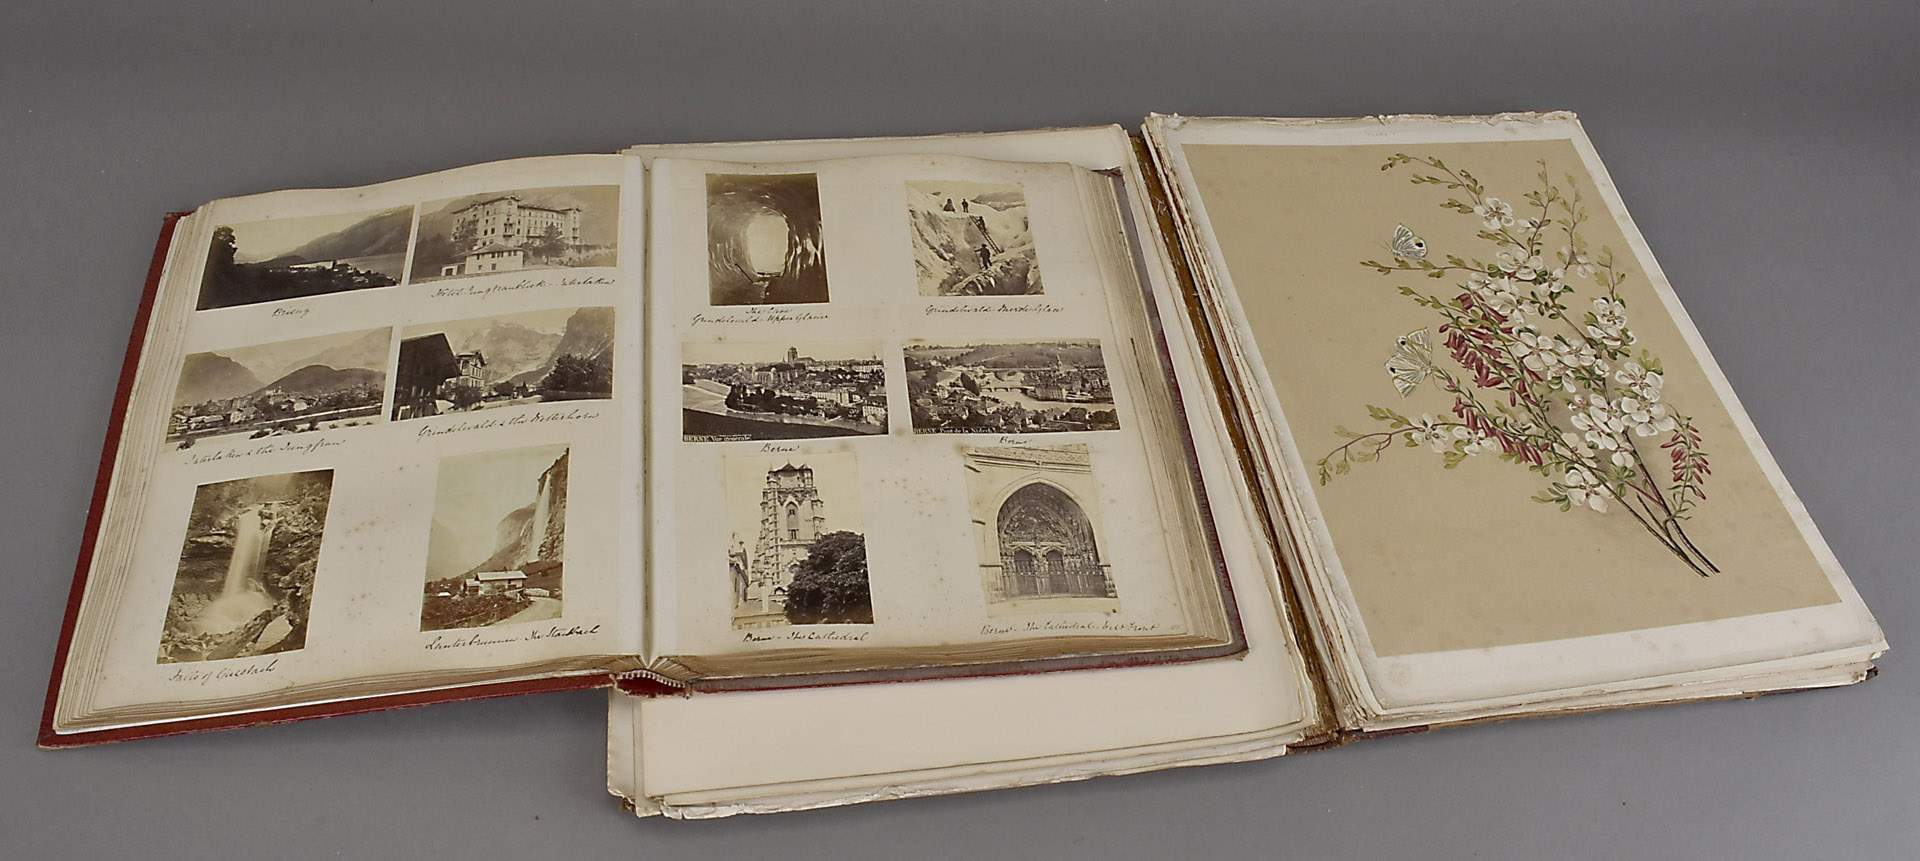 A 19th century photograph album, compiling tourist scenes from Great Britain, Prague, Switzerland,